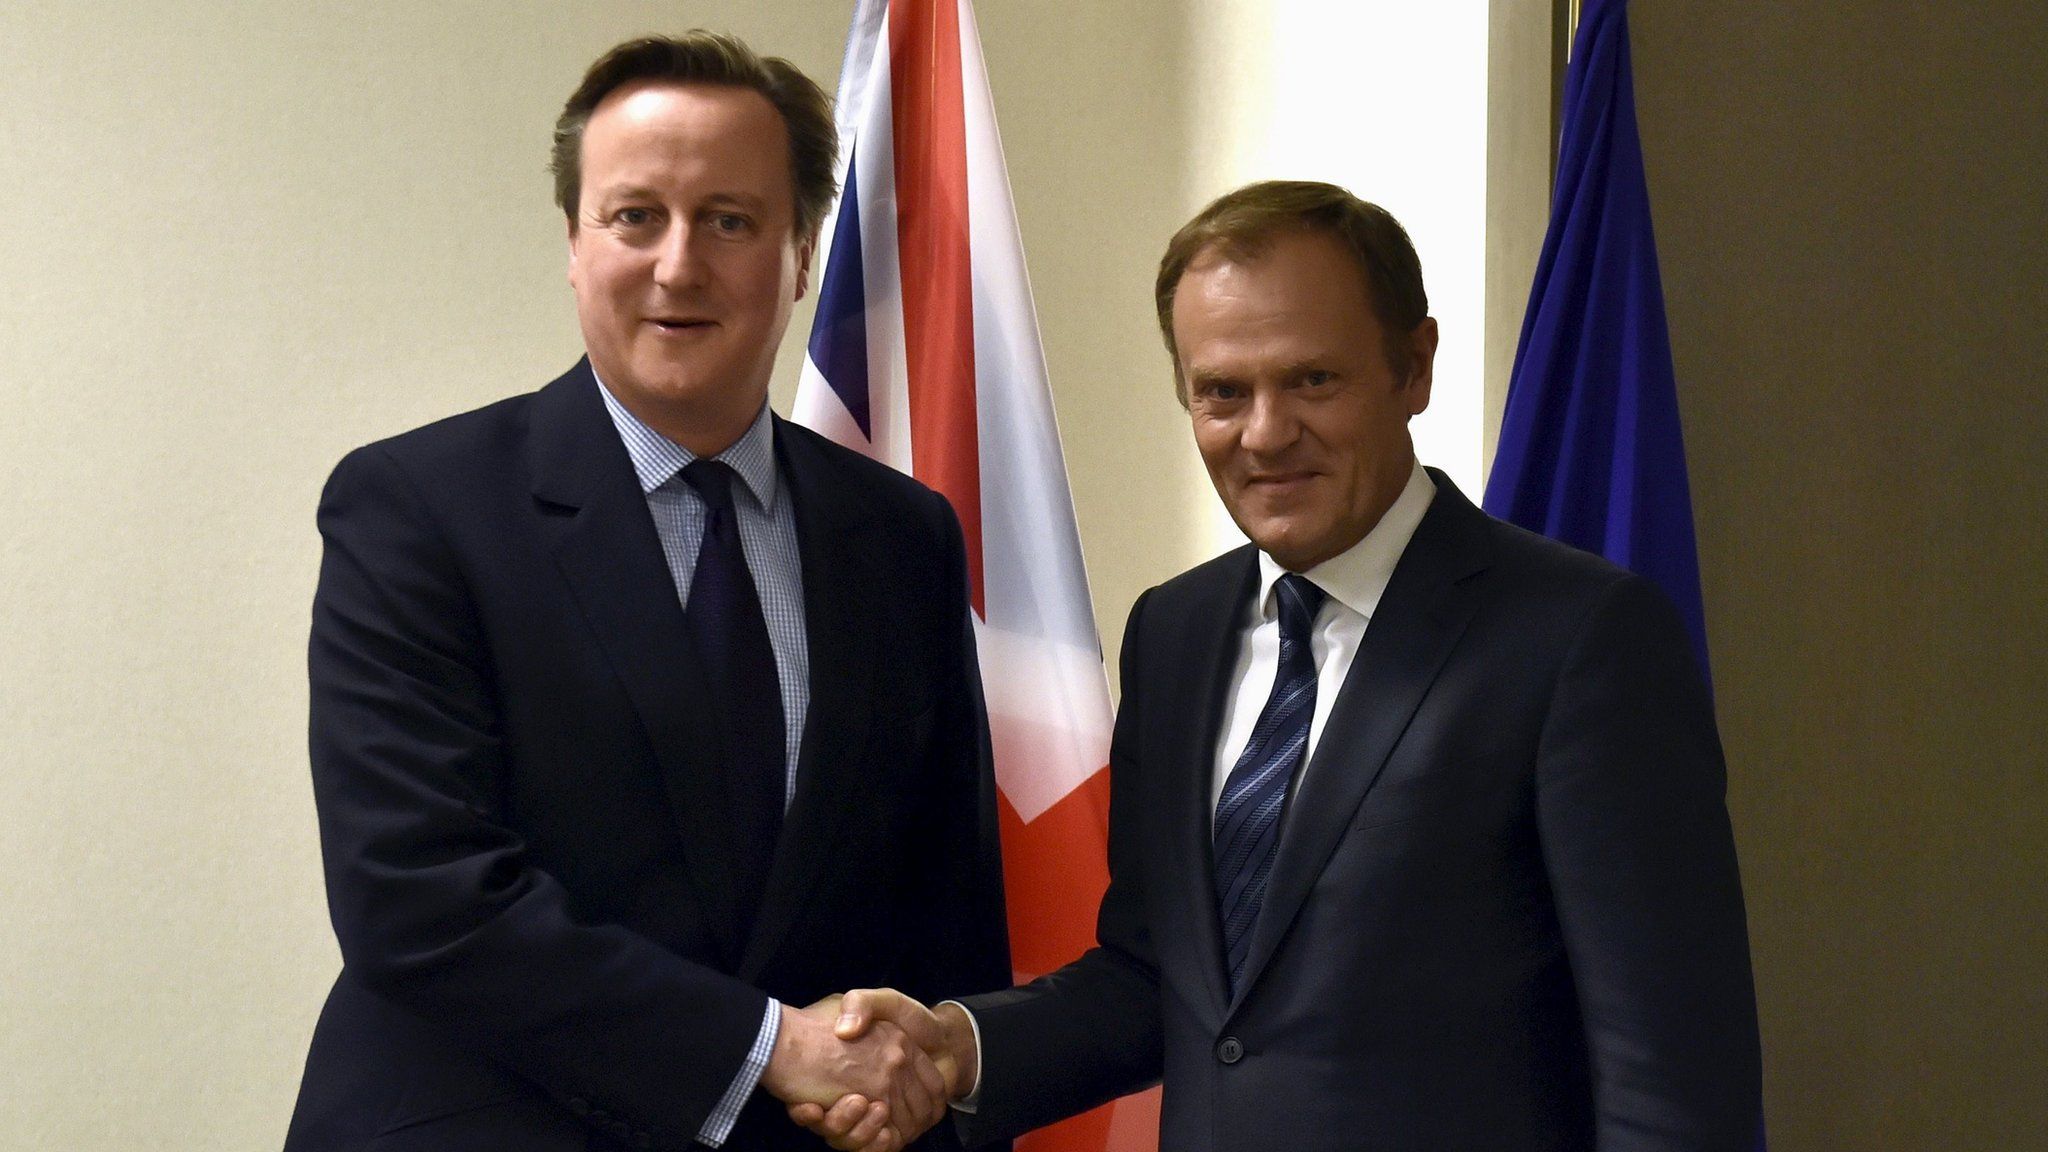 David Cameron shakes hands with Donald Tusk